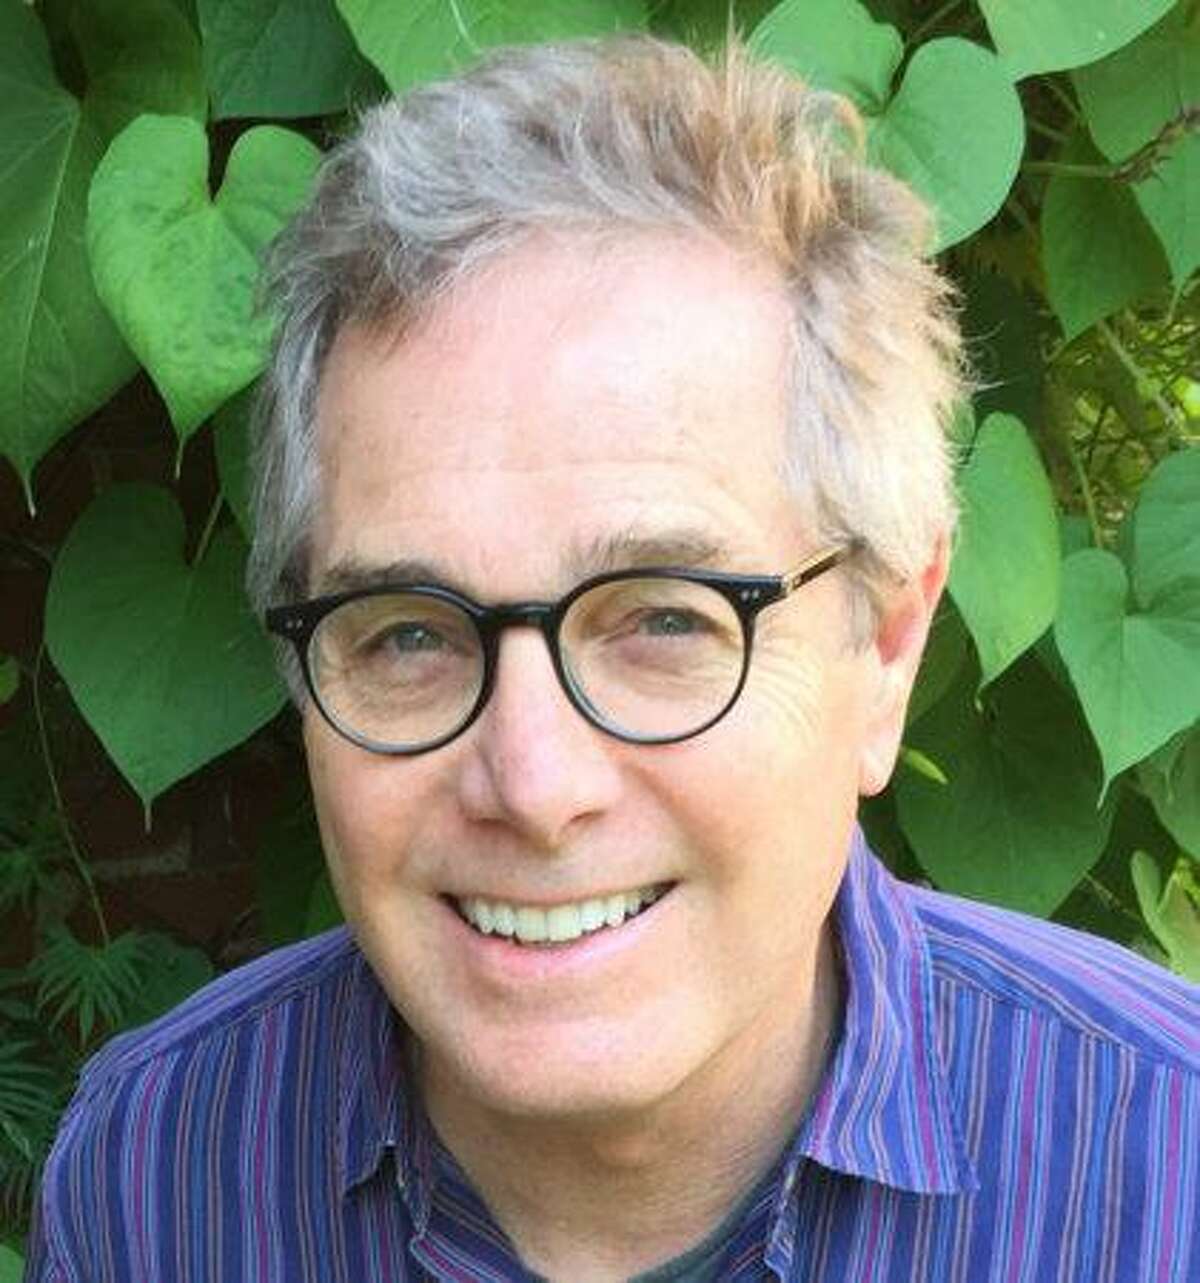 Author and journalist Doug Swanson